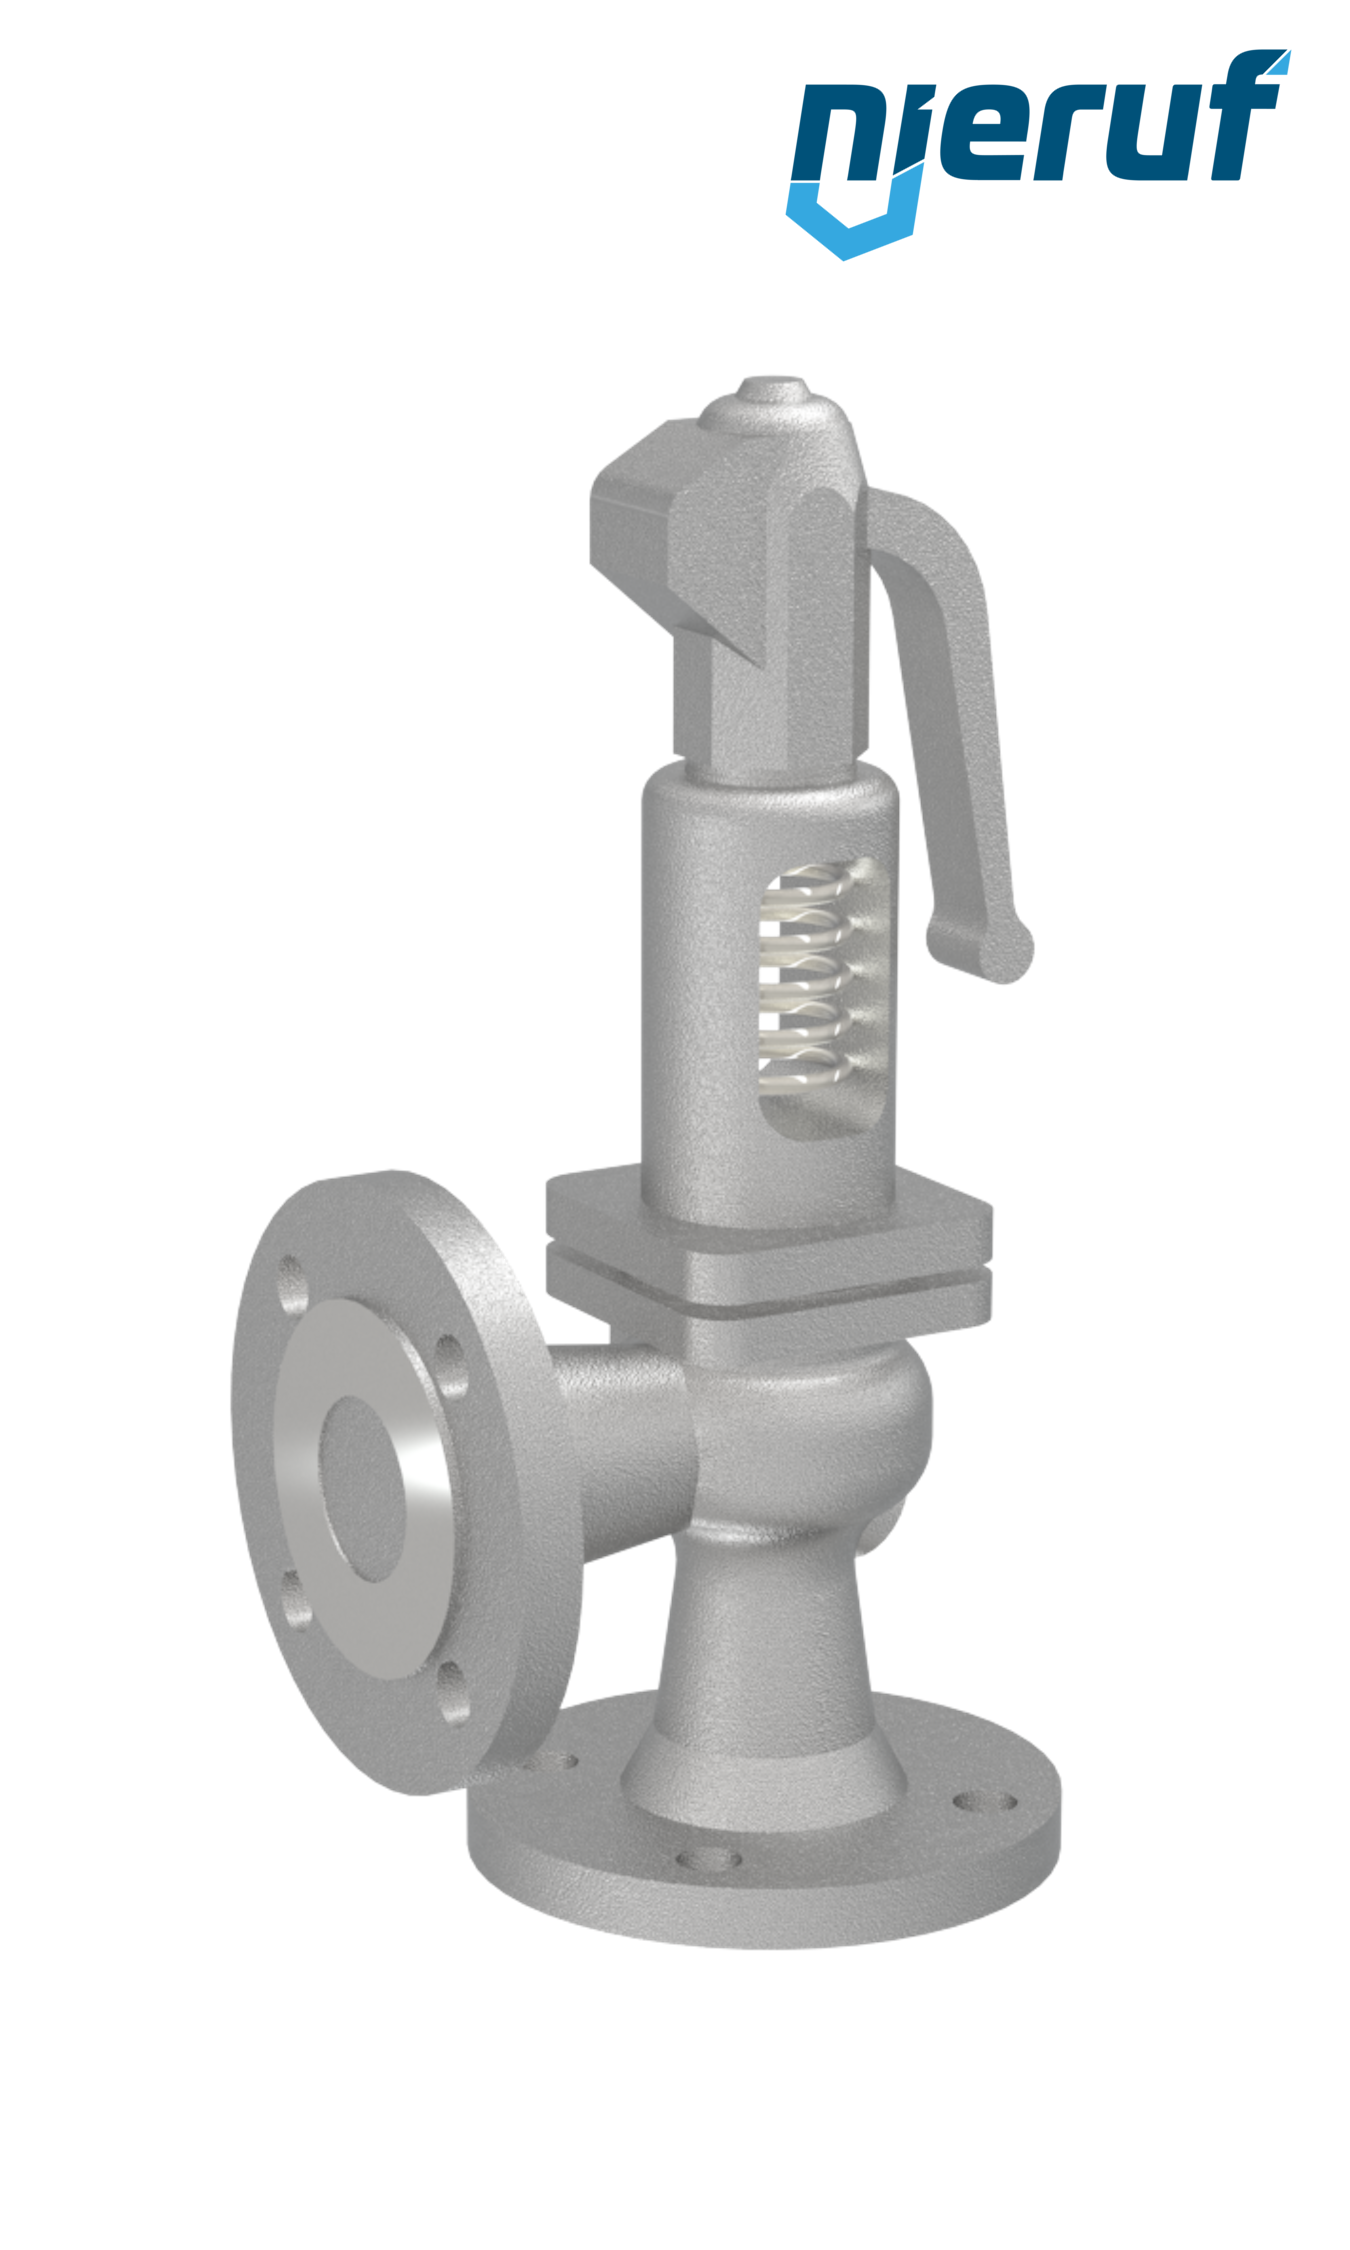 flange-safety valve DN65/DN65 SF0102, cast iron EN-JL1040 FPM, with lever